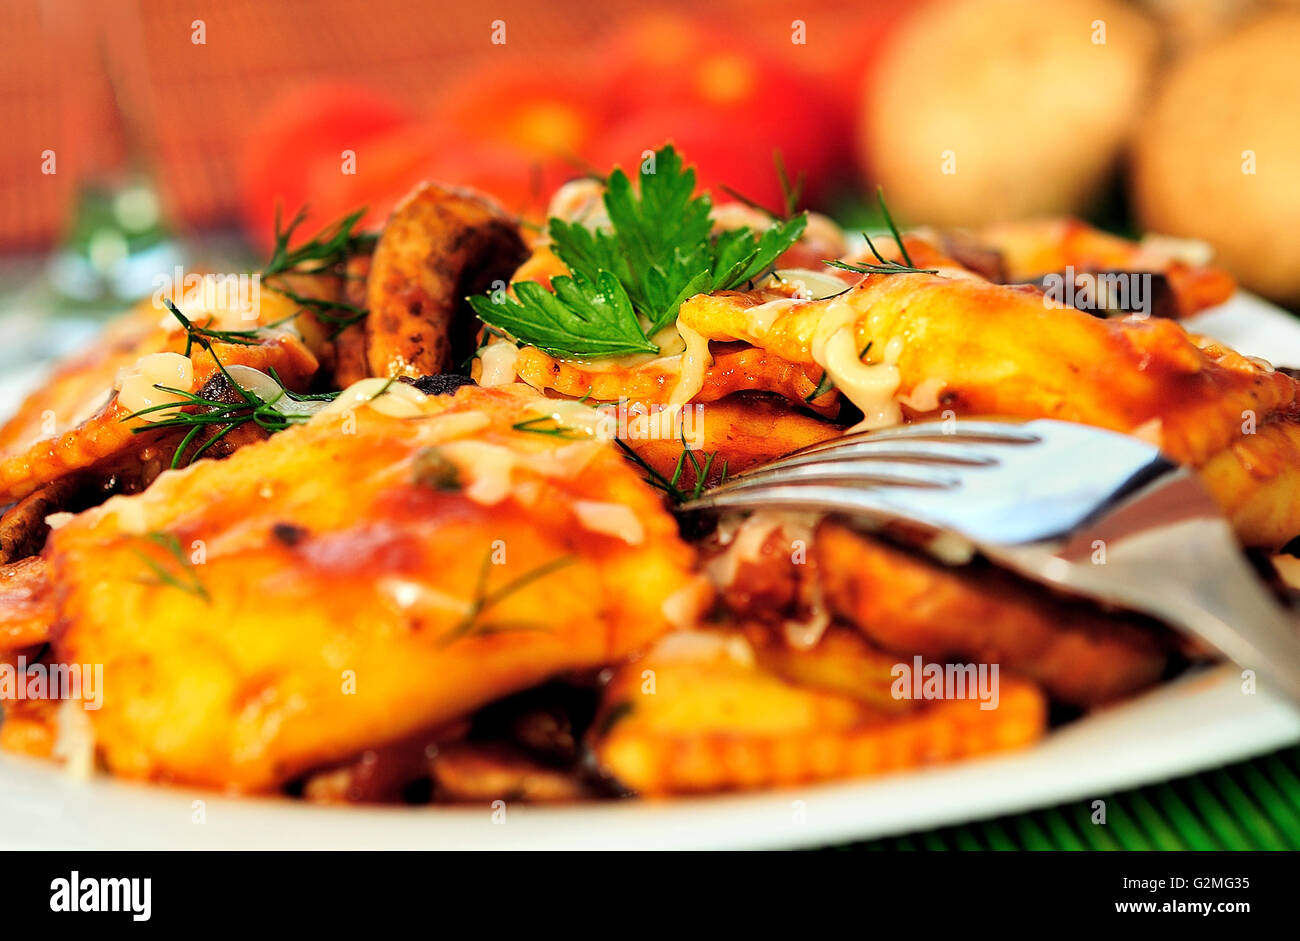 Plate with ravioli and champignon Stock Photo